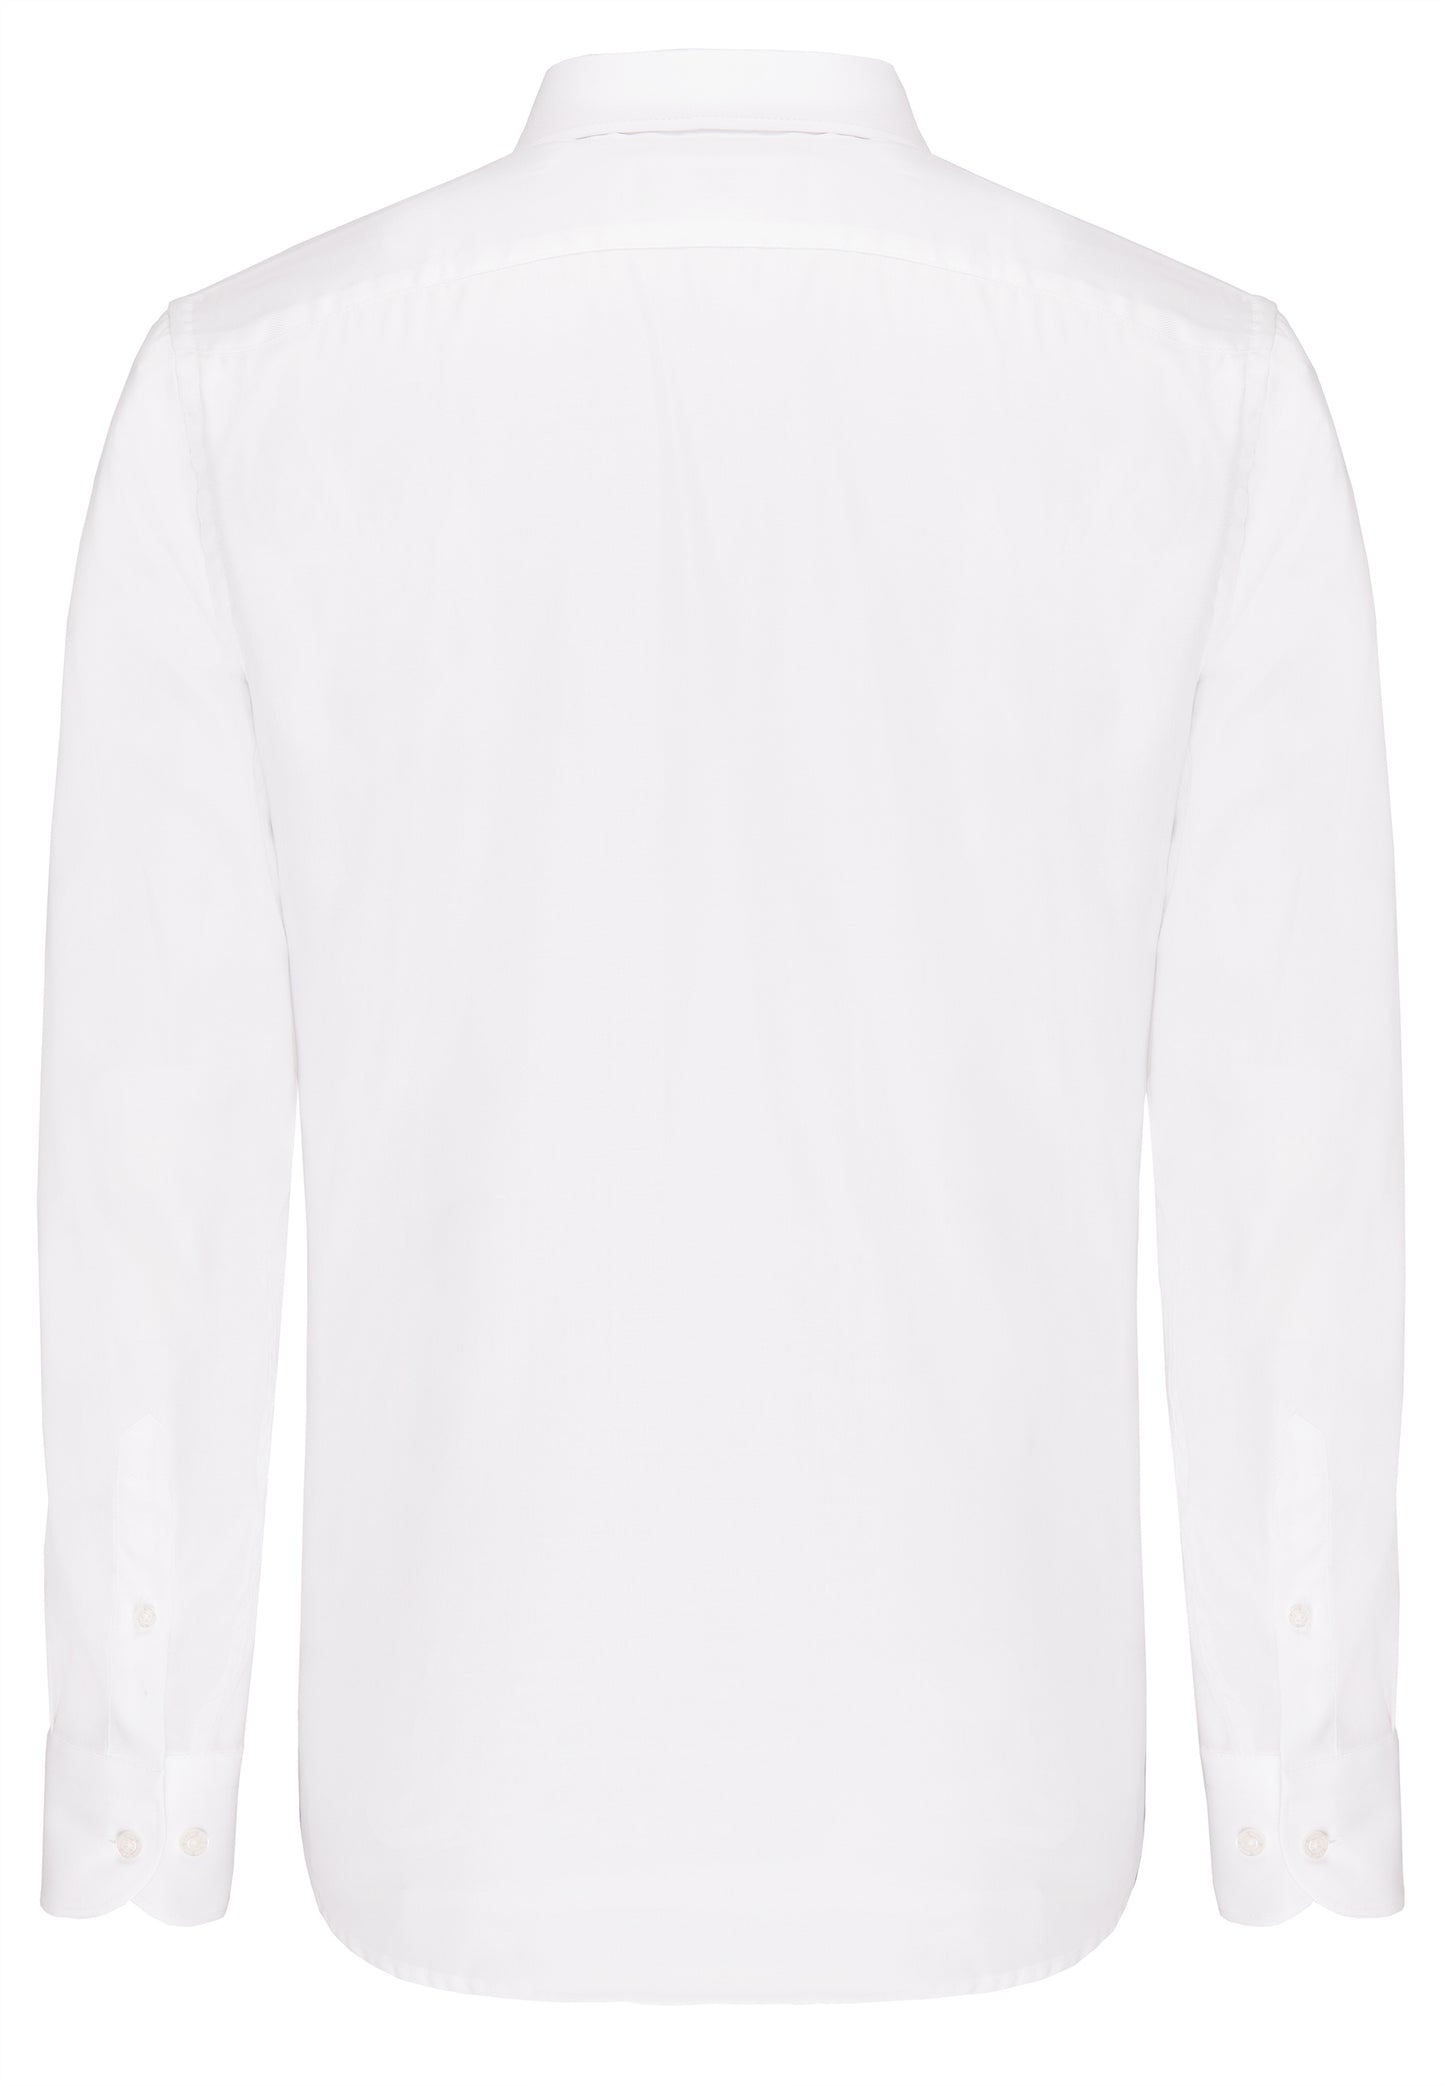 CARL GROSS Cotton Shirt Edan, White